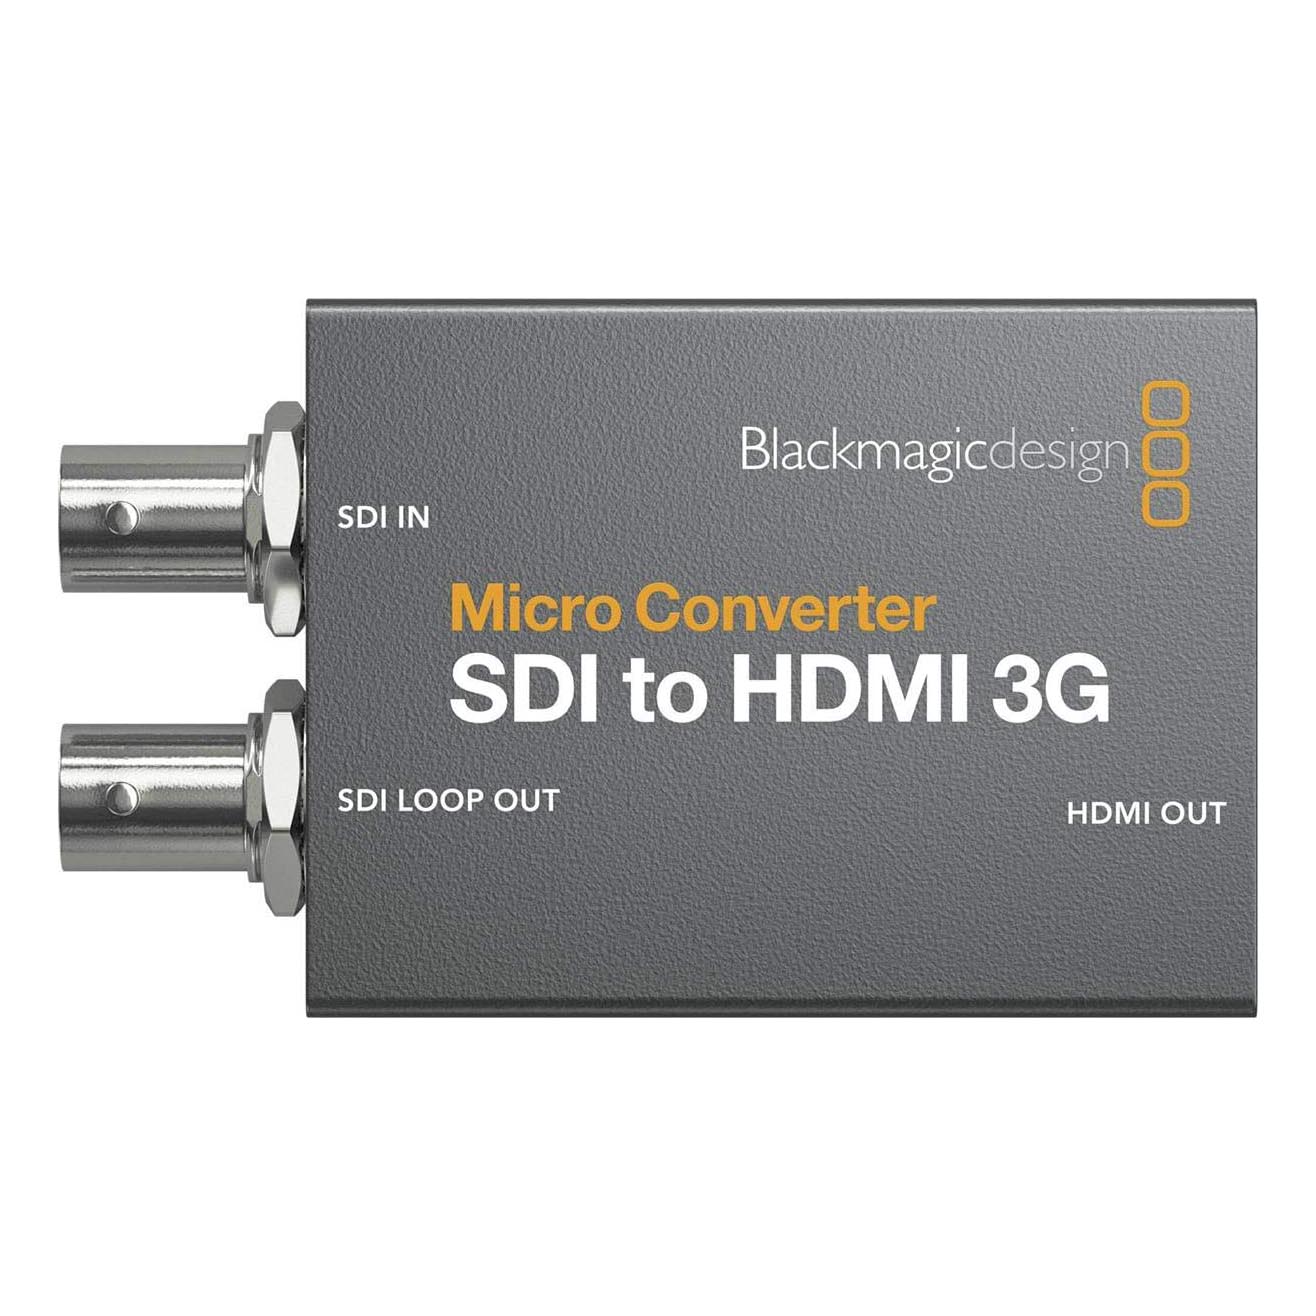 Конвертер Blackmagic Design Micro Converter SDI to HDMI 3G PSU конвертер blackmagic design micro converter sdi to hdmi 3g